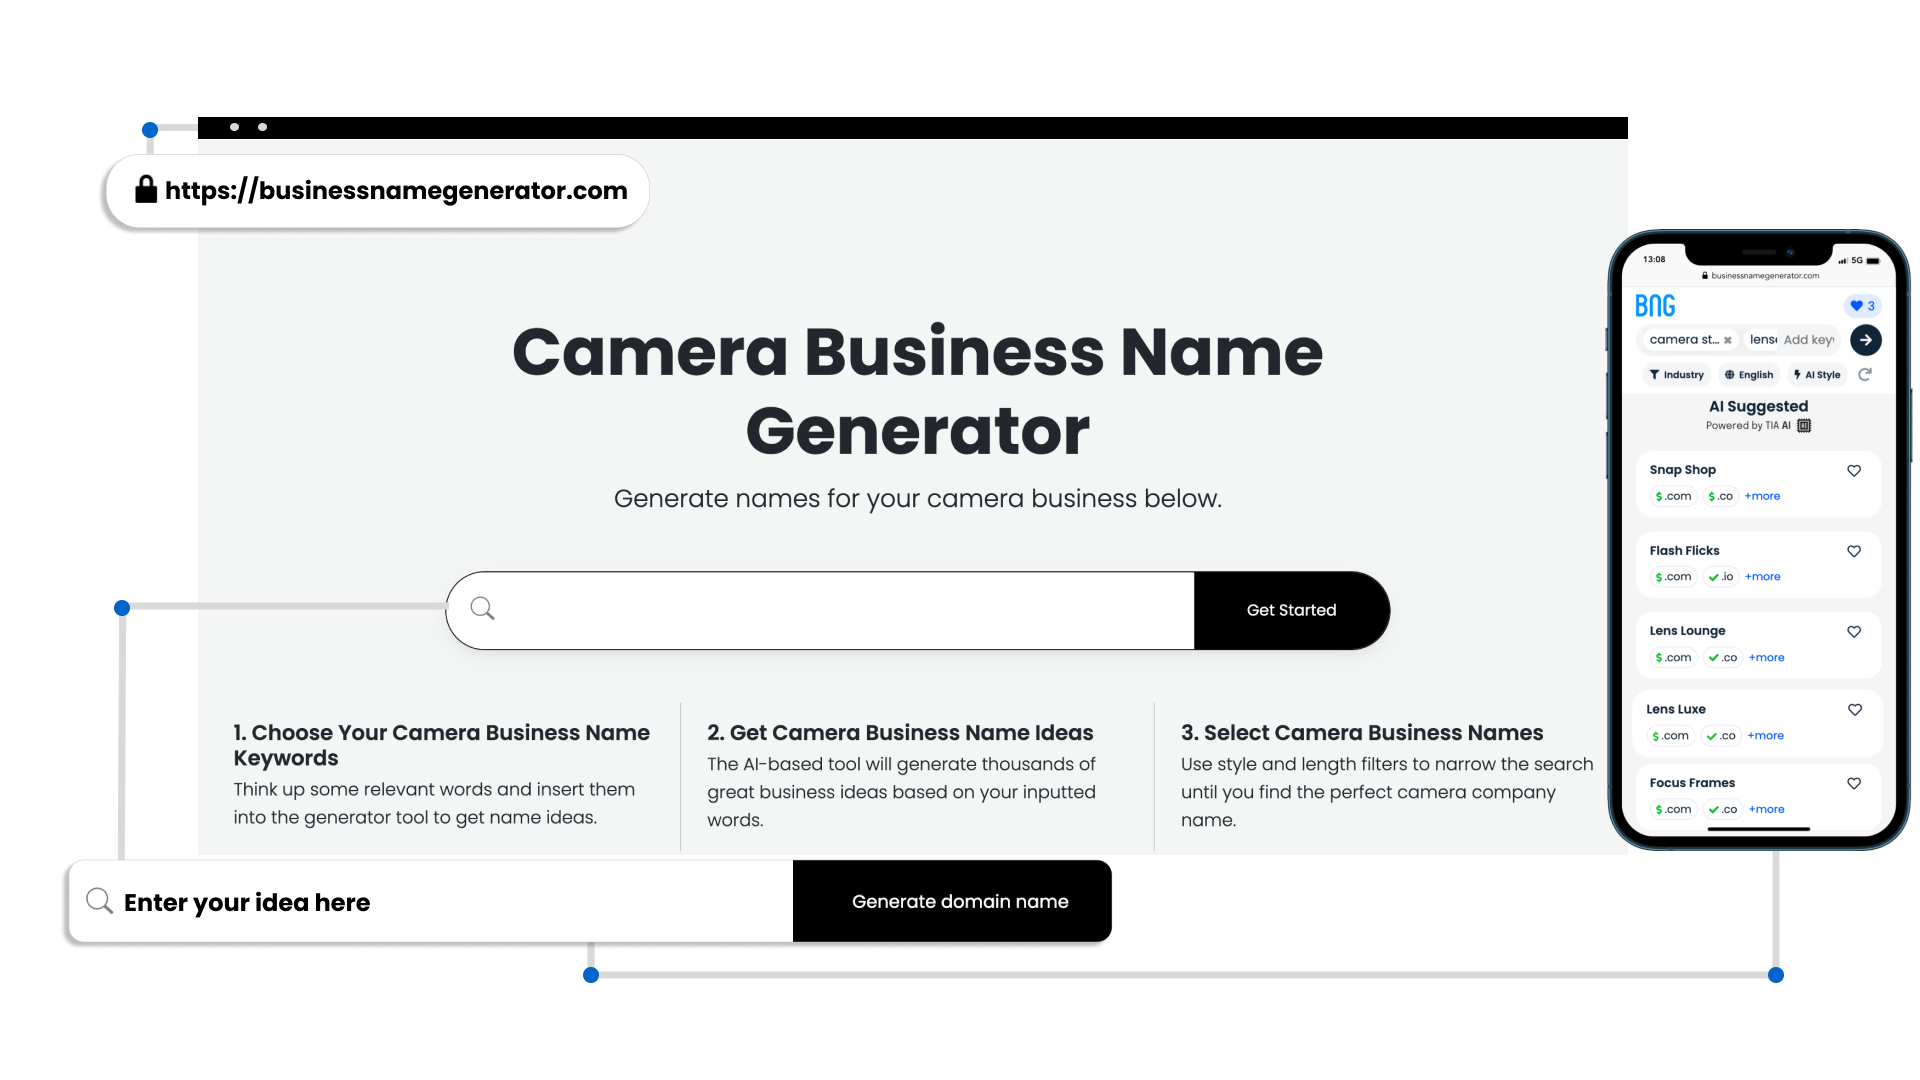 Screenshot - Camera Business Name Generator Functionality